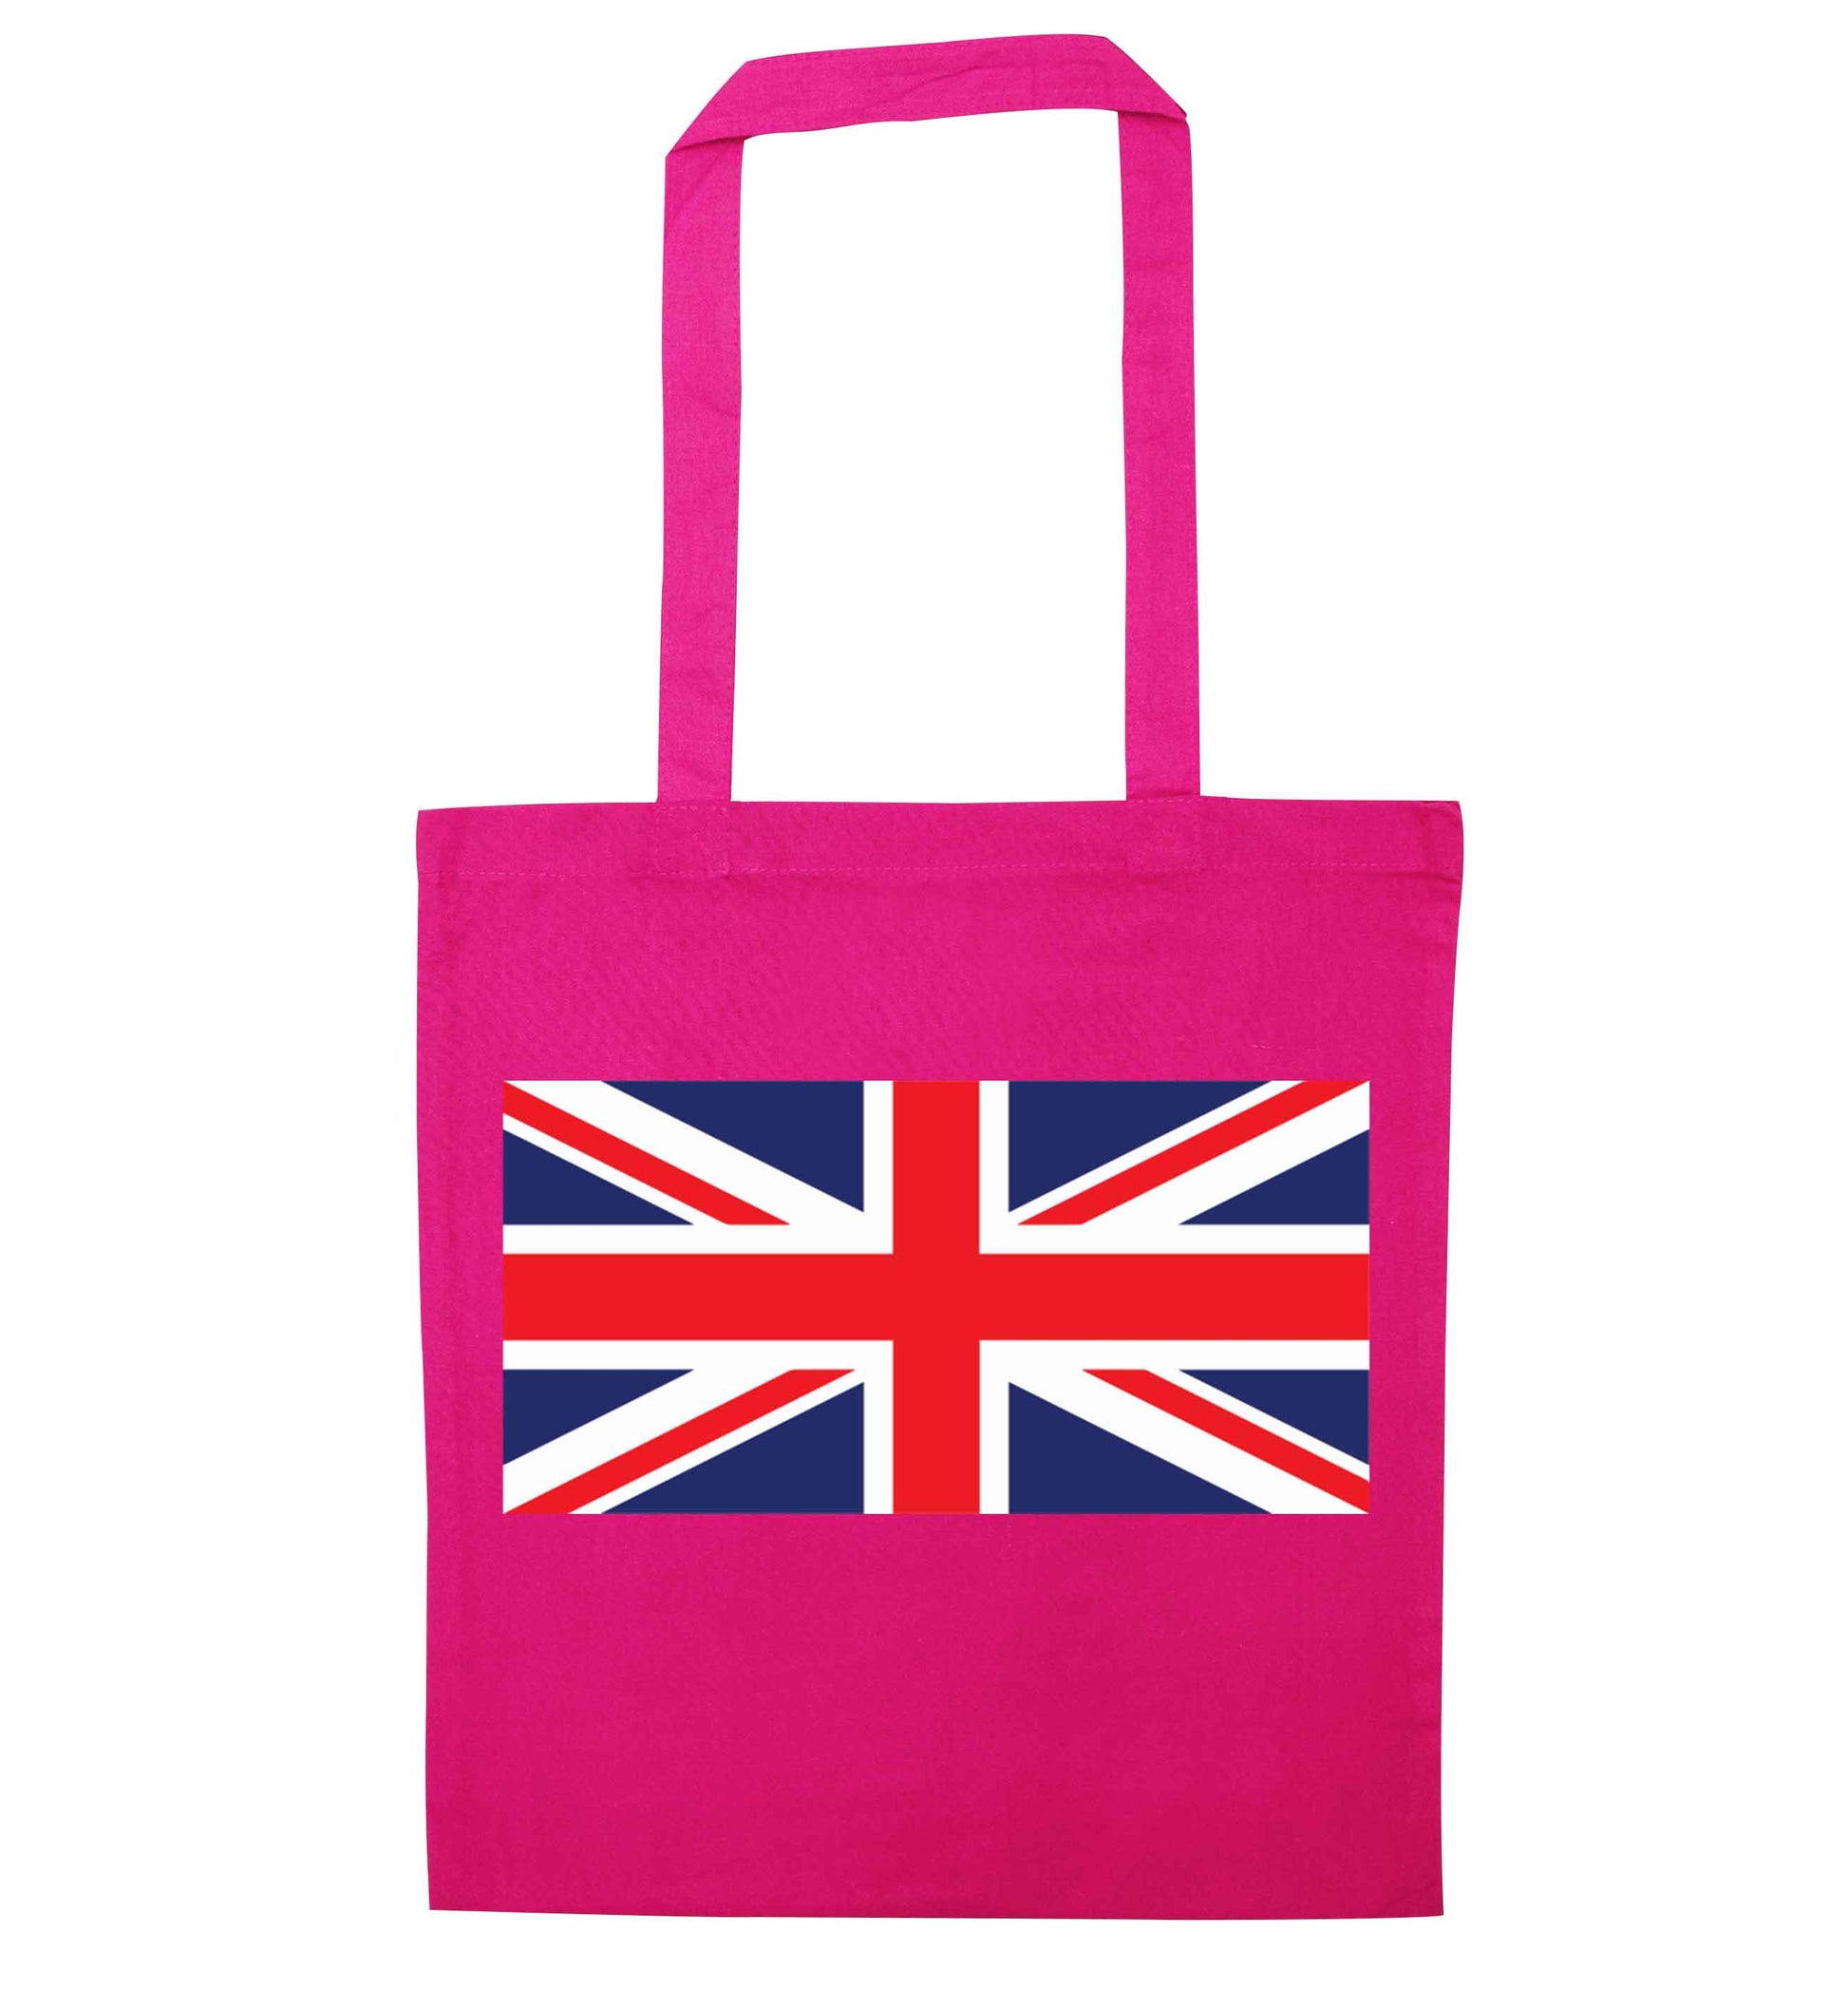 Union Jack pink tote bag